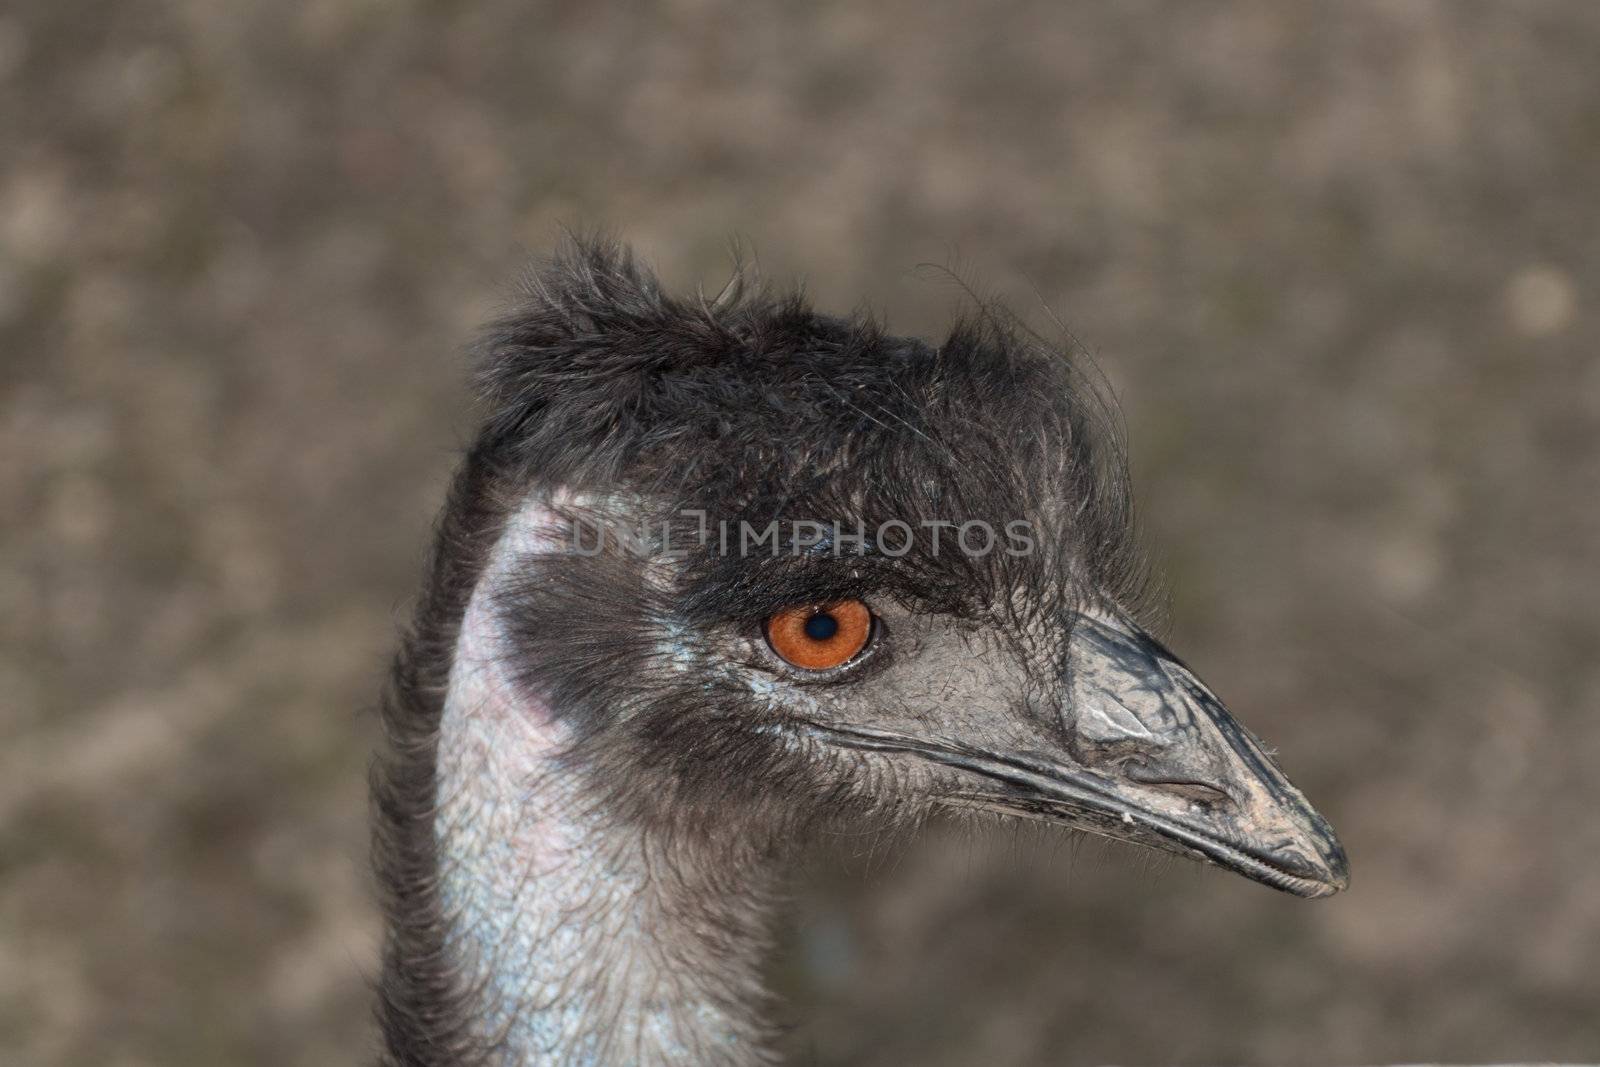 ostrich portrait, close-up head